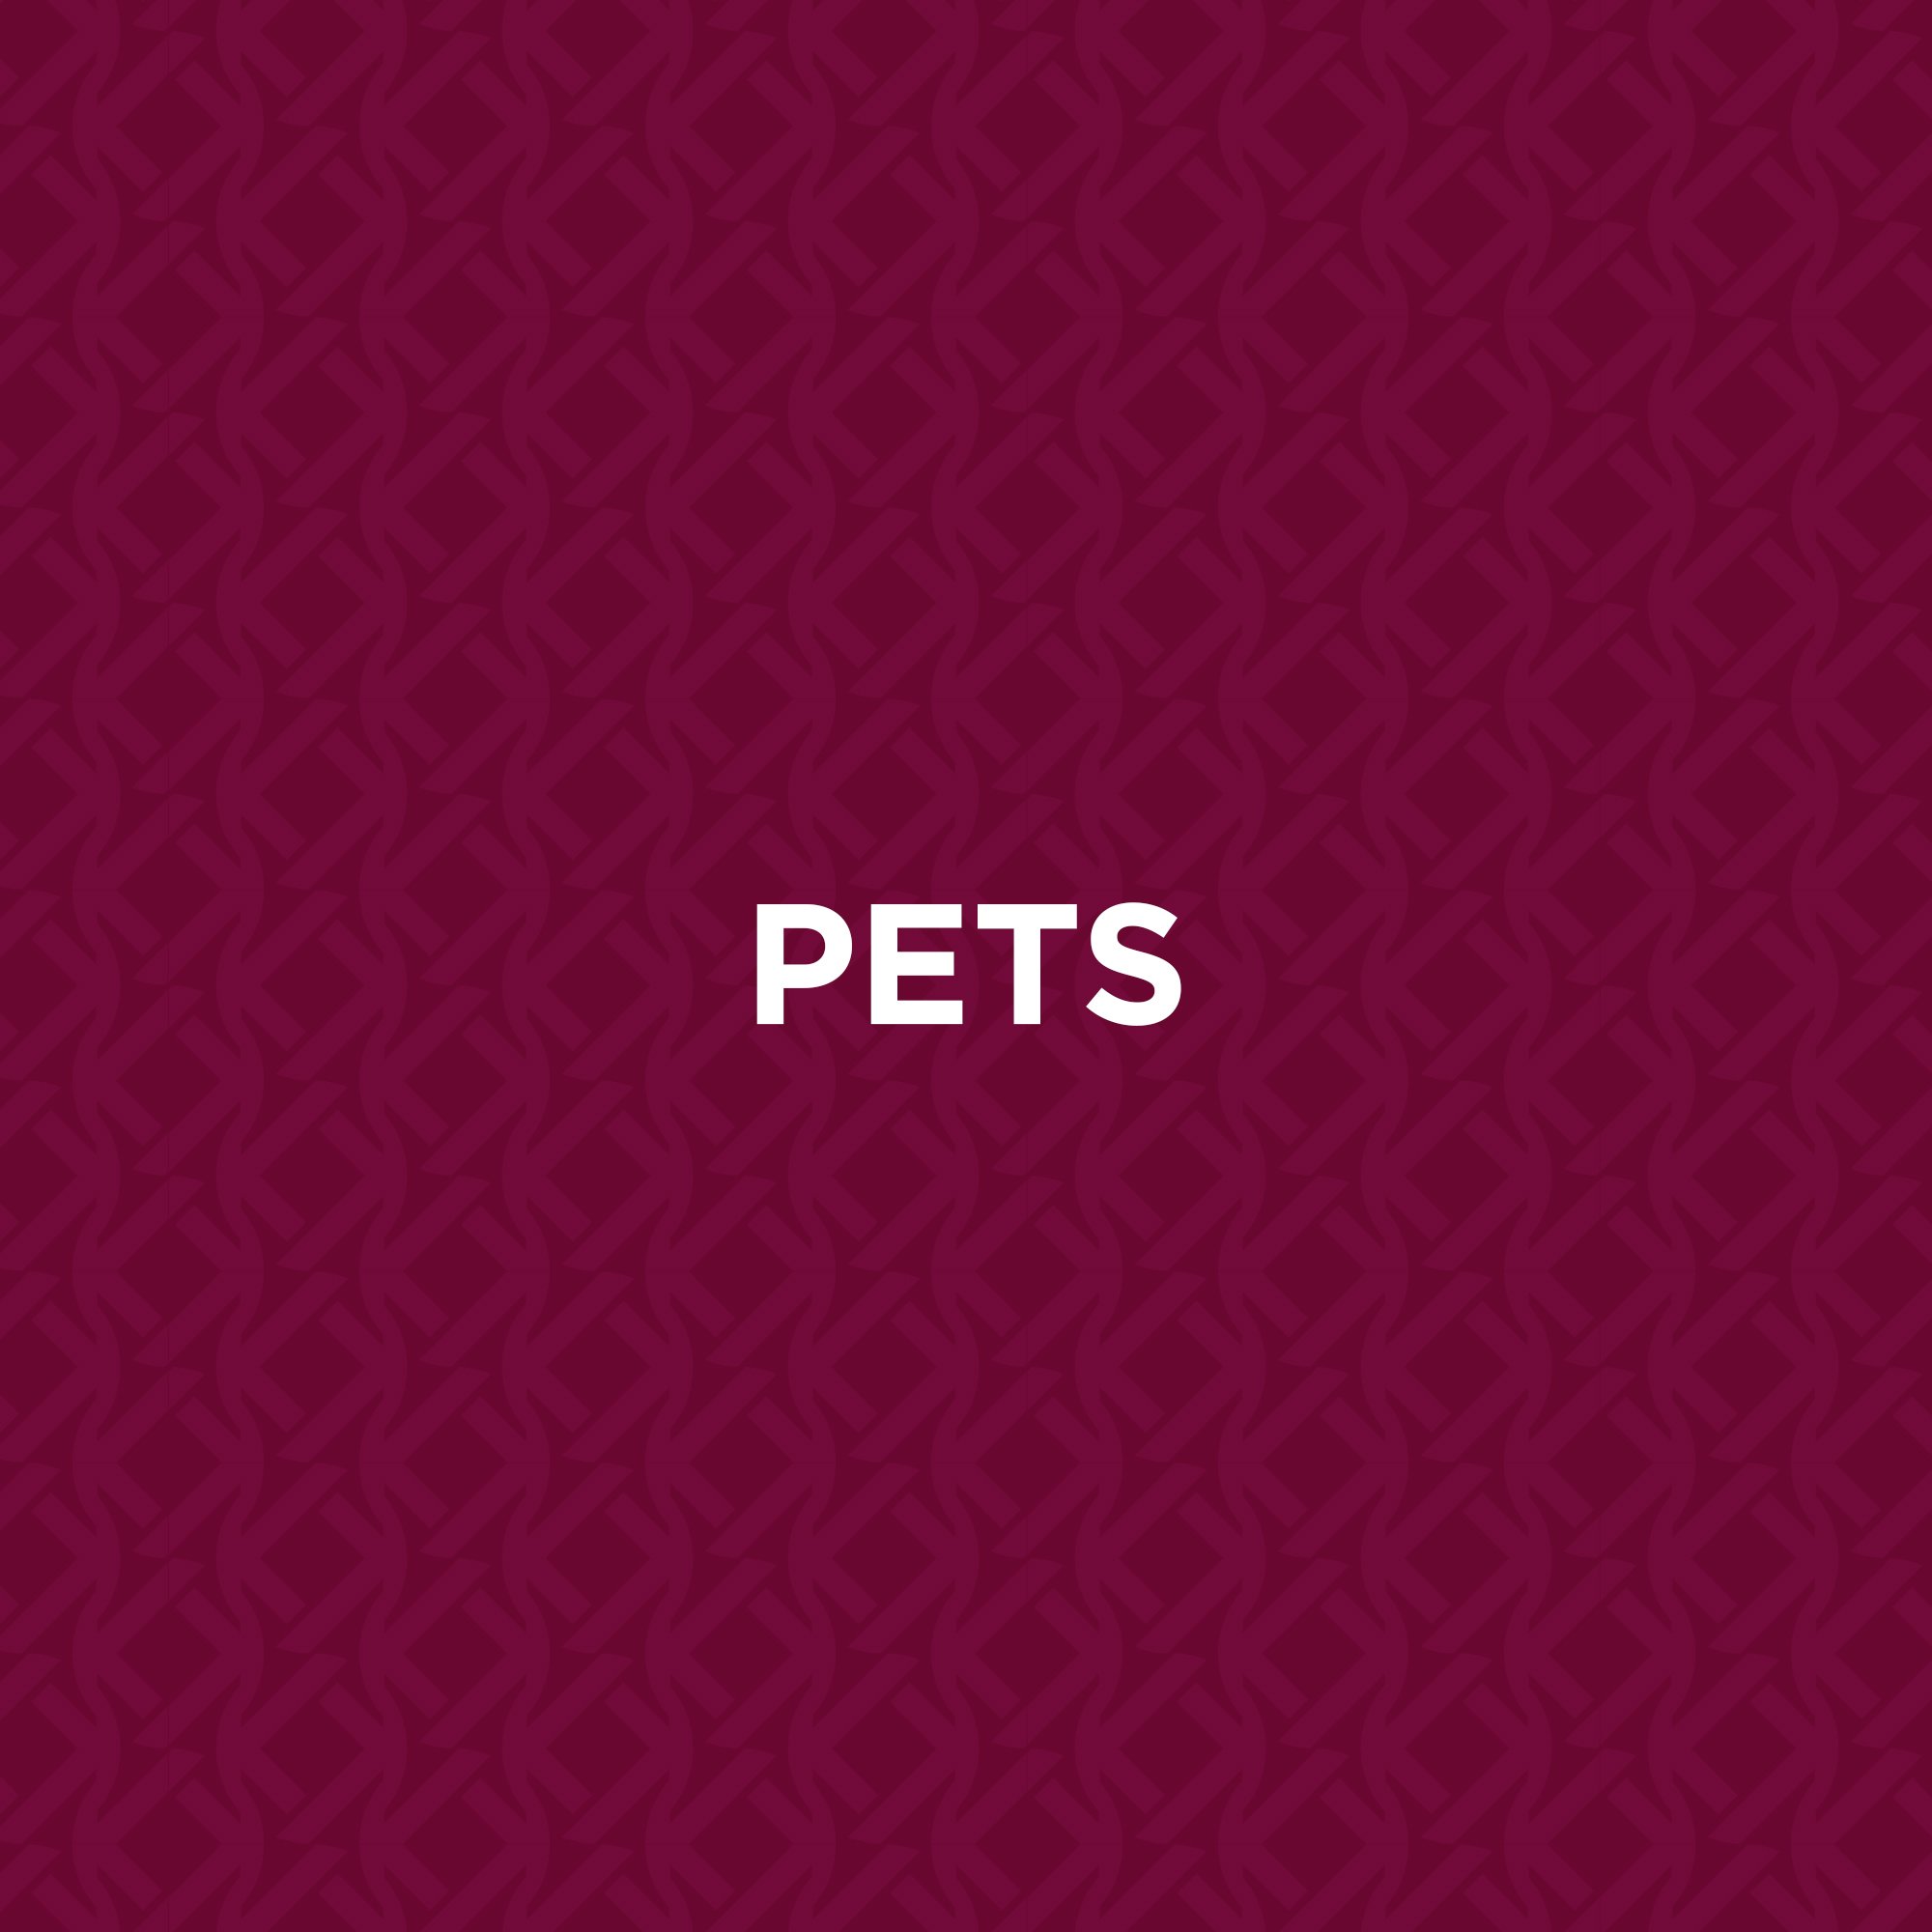 Pets.jpg